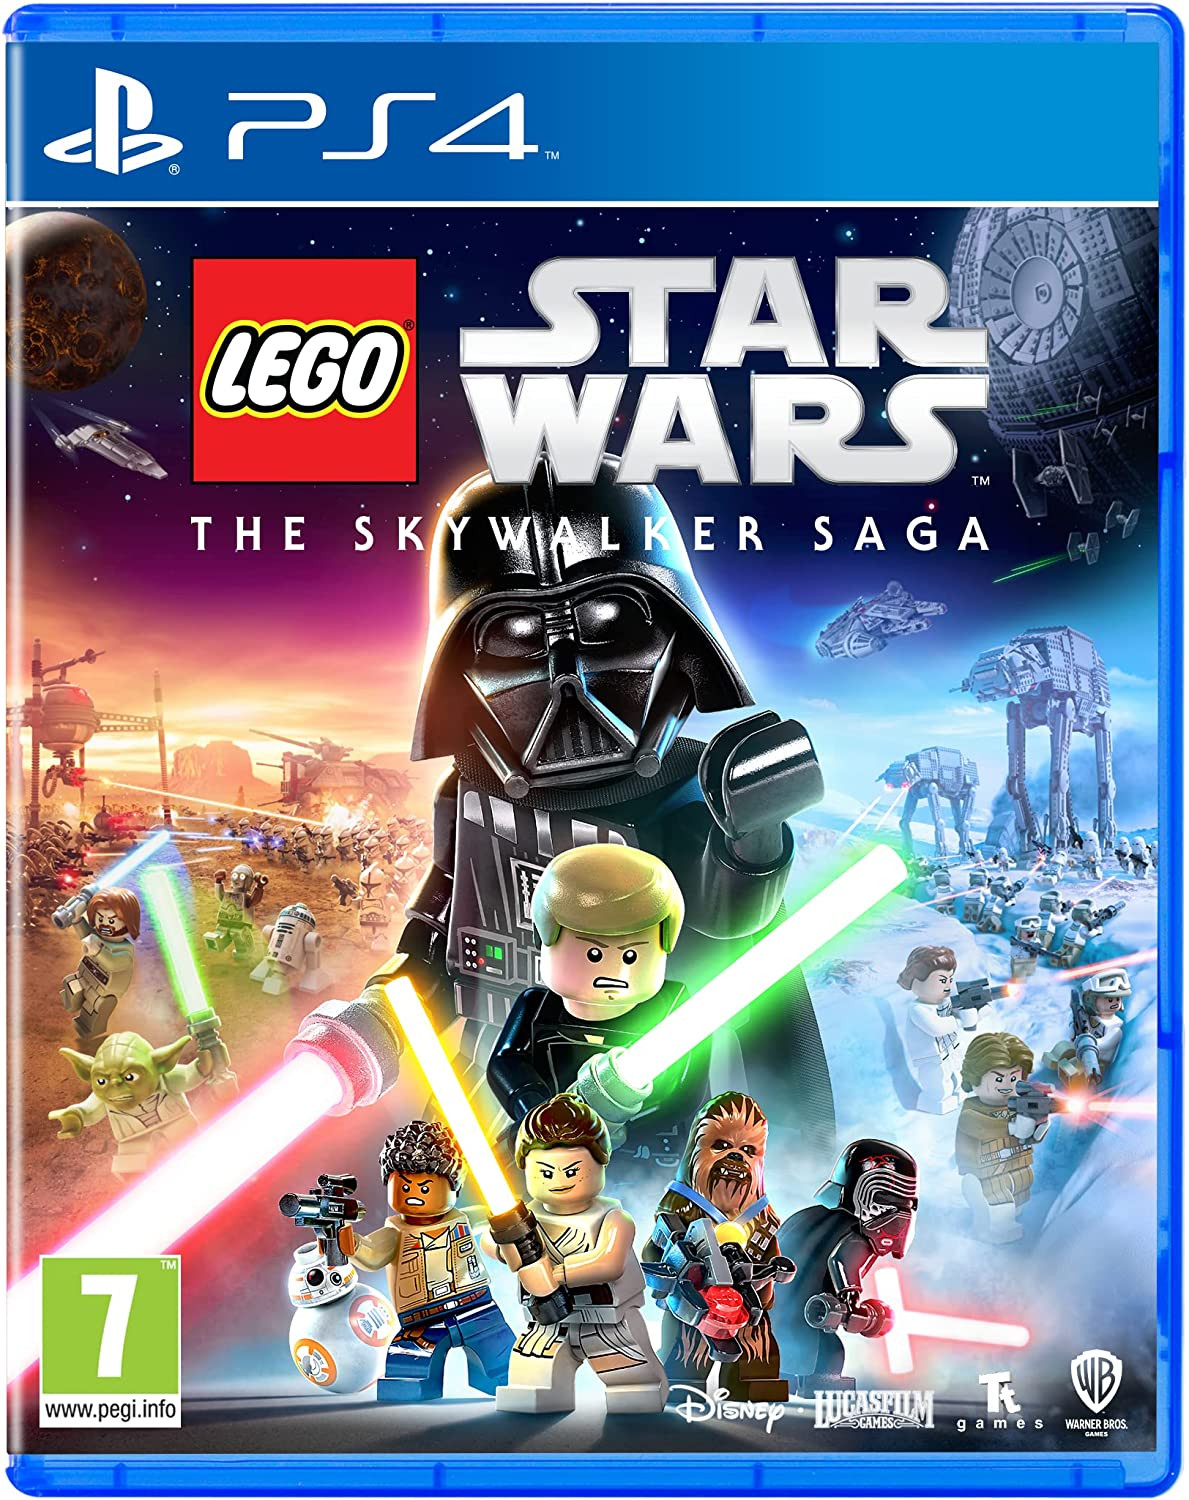 diefstal Sneeuwwitje roterend Nedgame gameshop: Lego Star Wars The Skywalker Saga (PlayStation 4) kopen -  aanbieding!